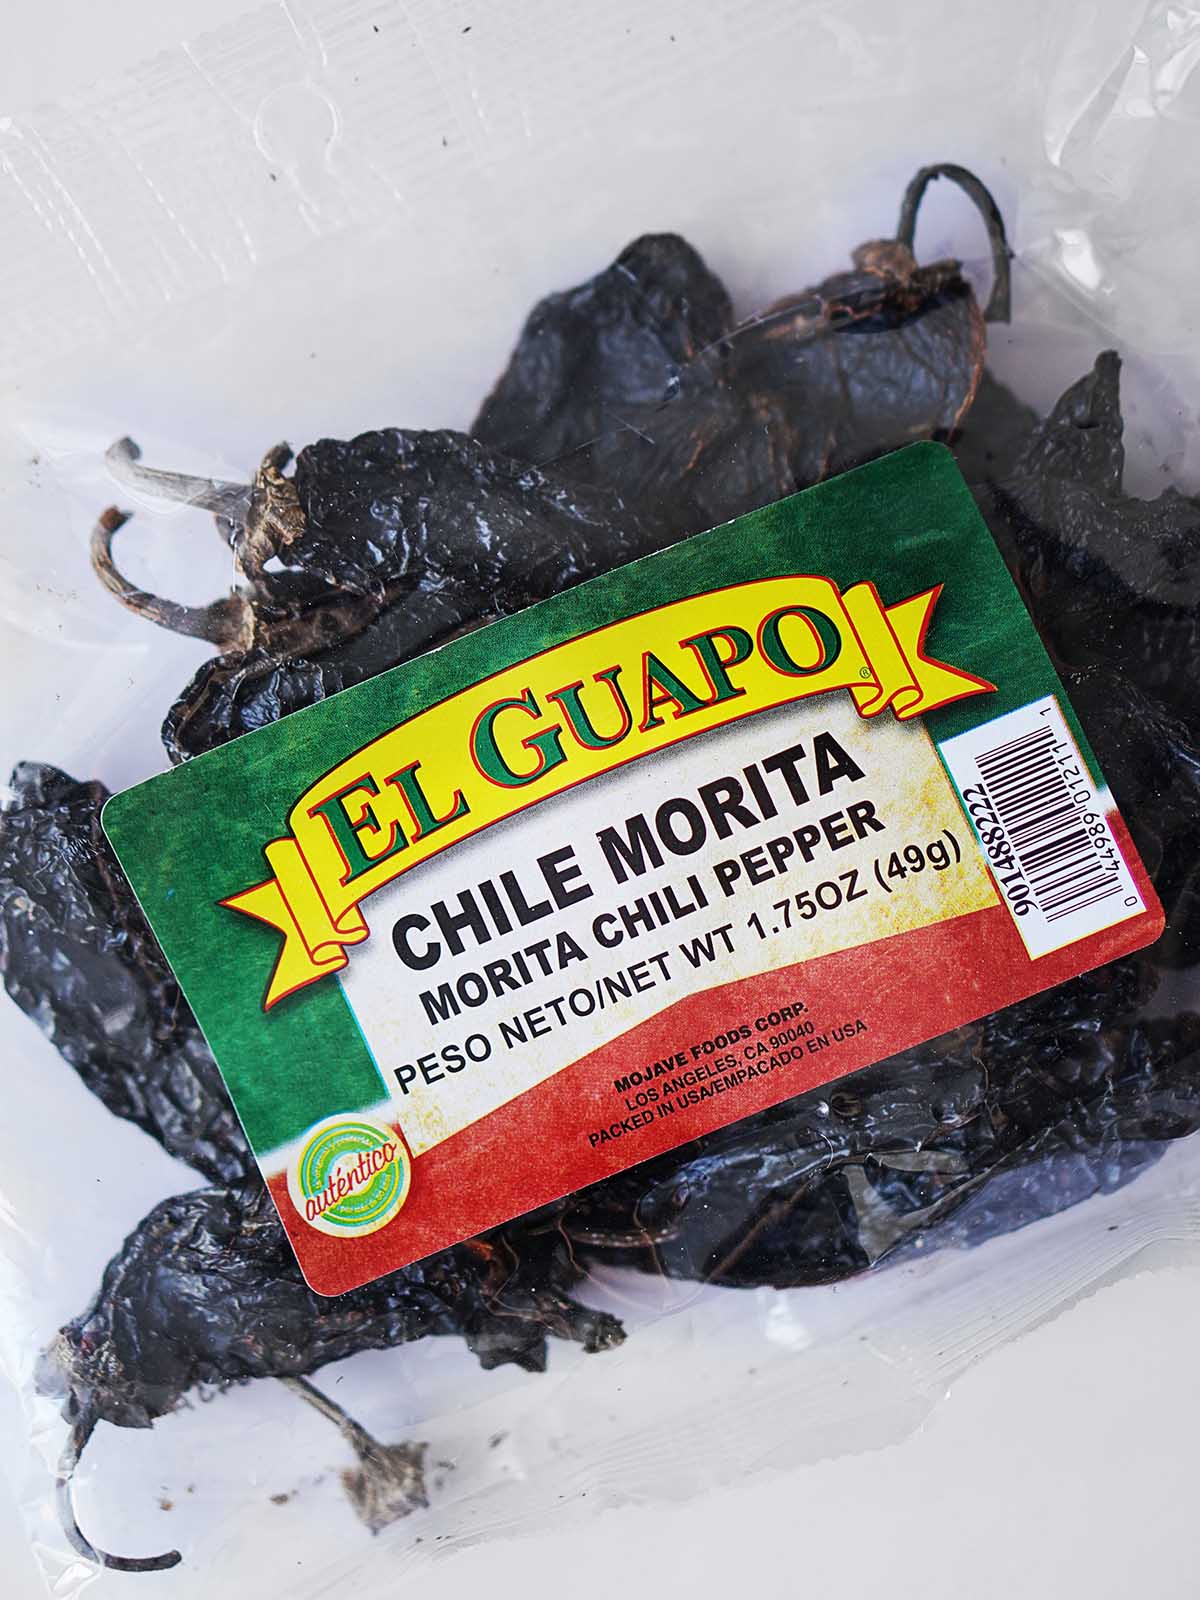 A plastic clear bag of chile morita.